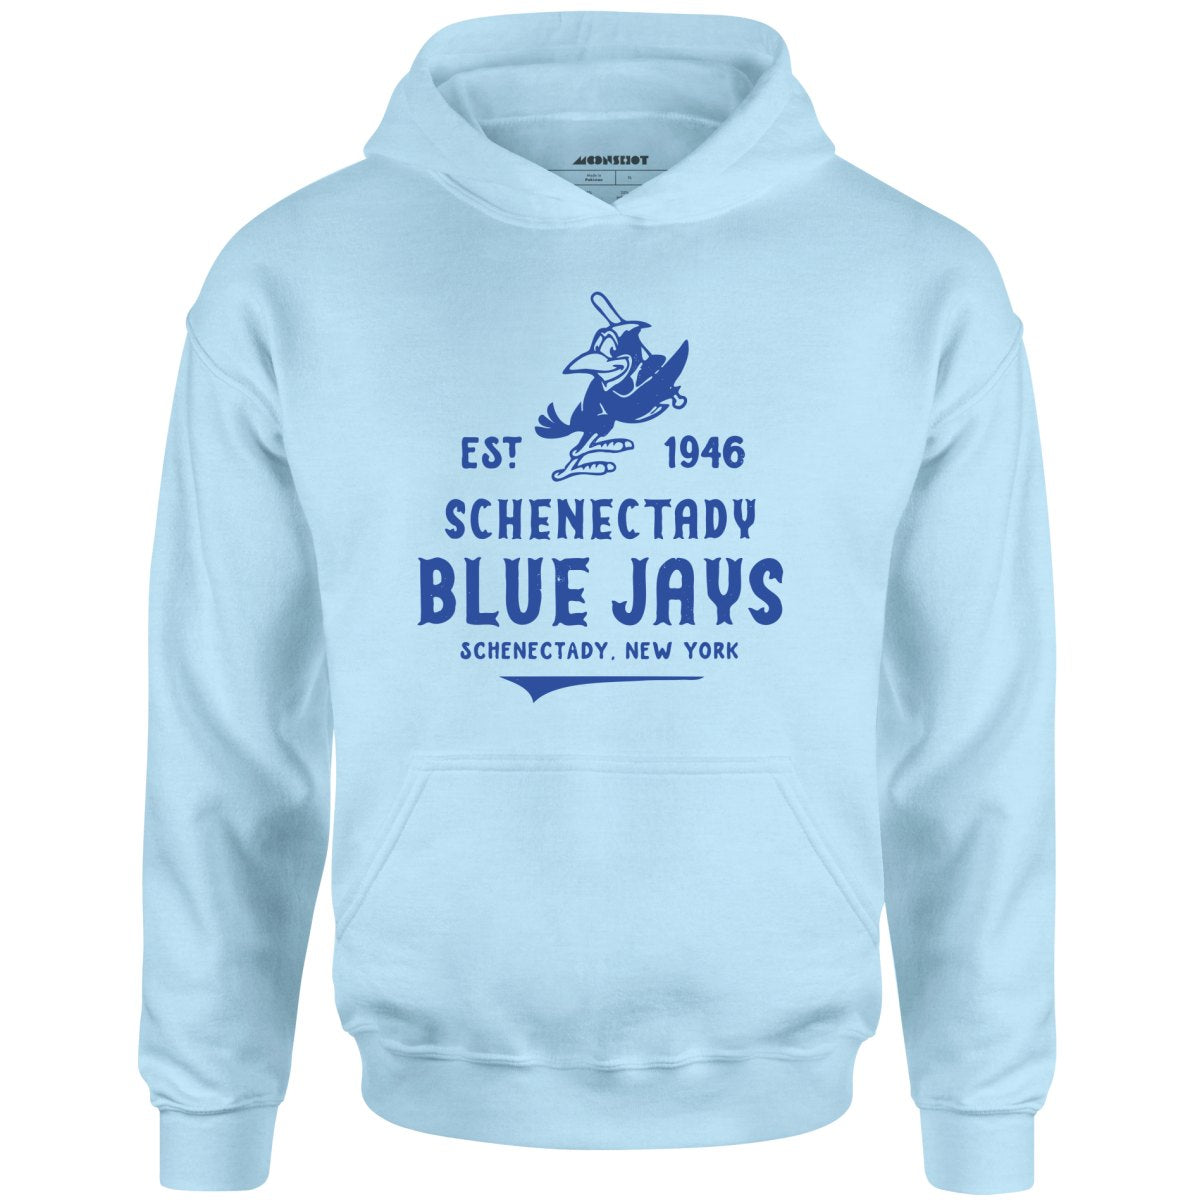 Schenectady Blue Jays - New York - Vintage Defunct Baseball Teams - Unisex Hoodie